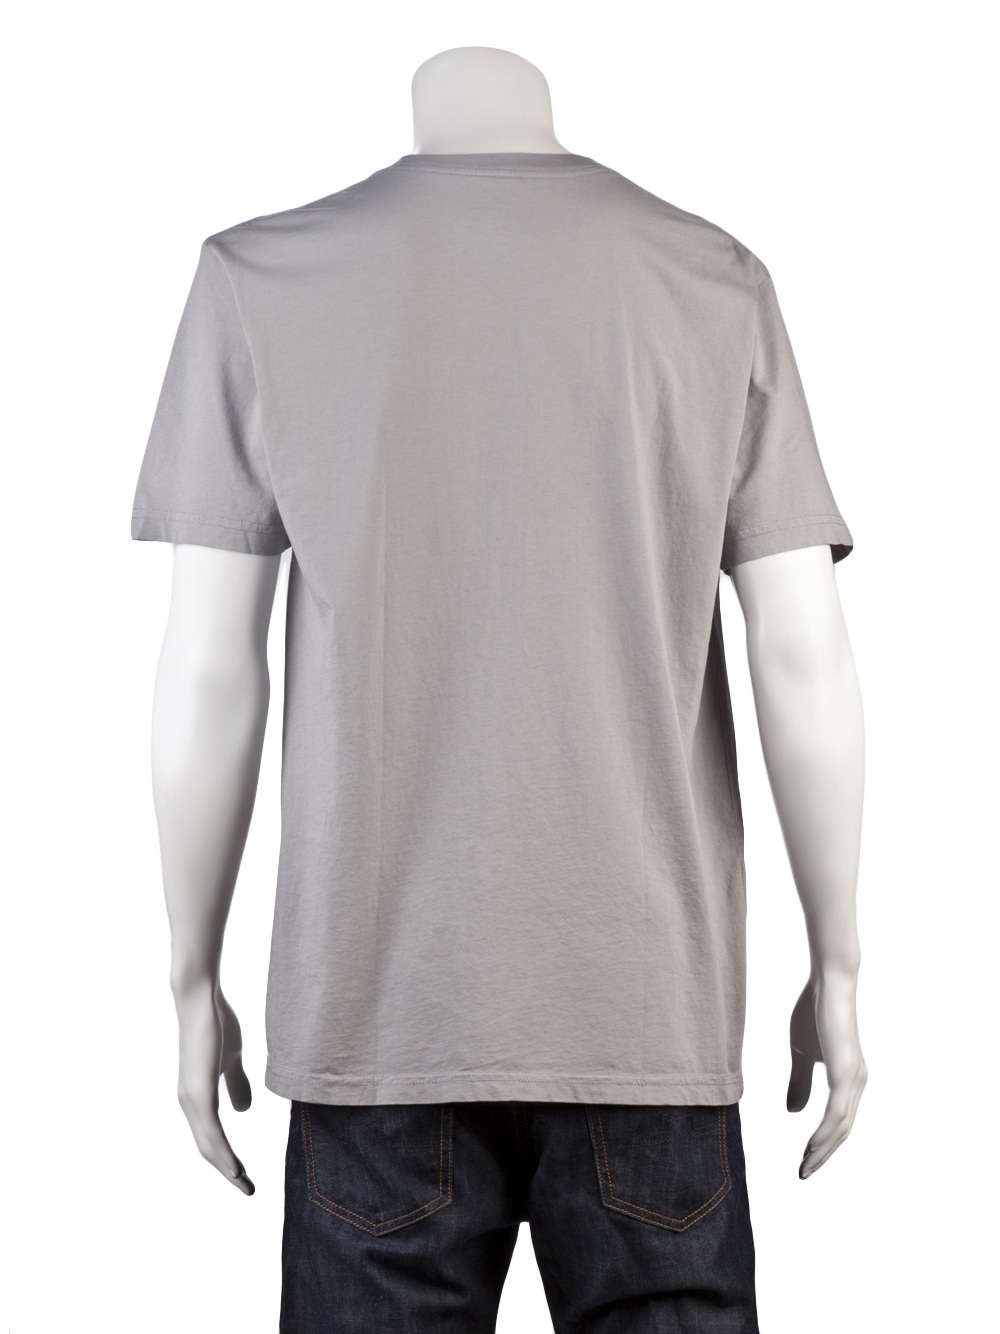 Lyst - Freshjive Blunt Roll T-shirt in Gray for Men